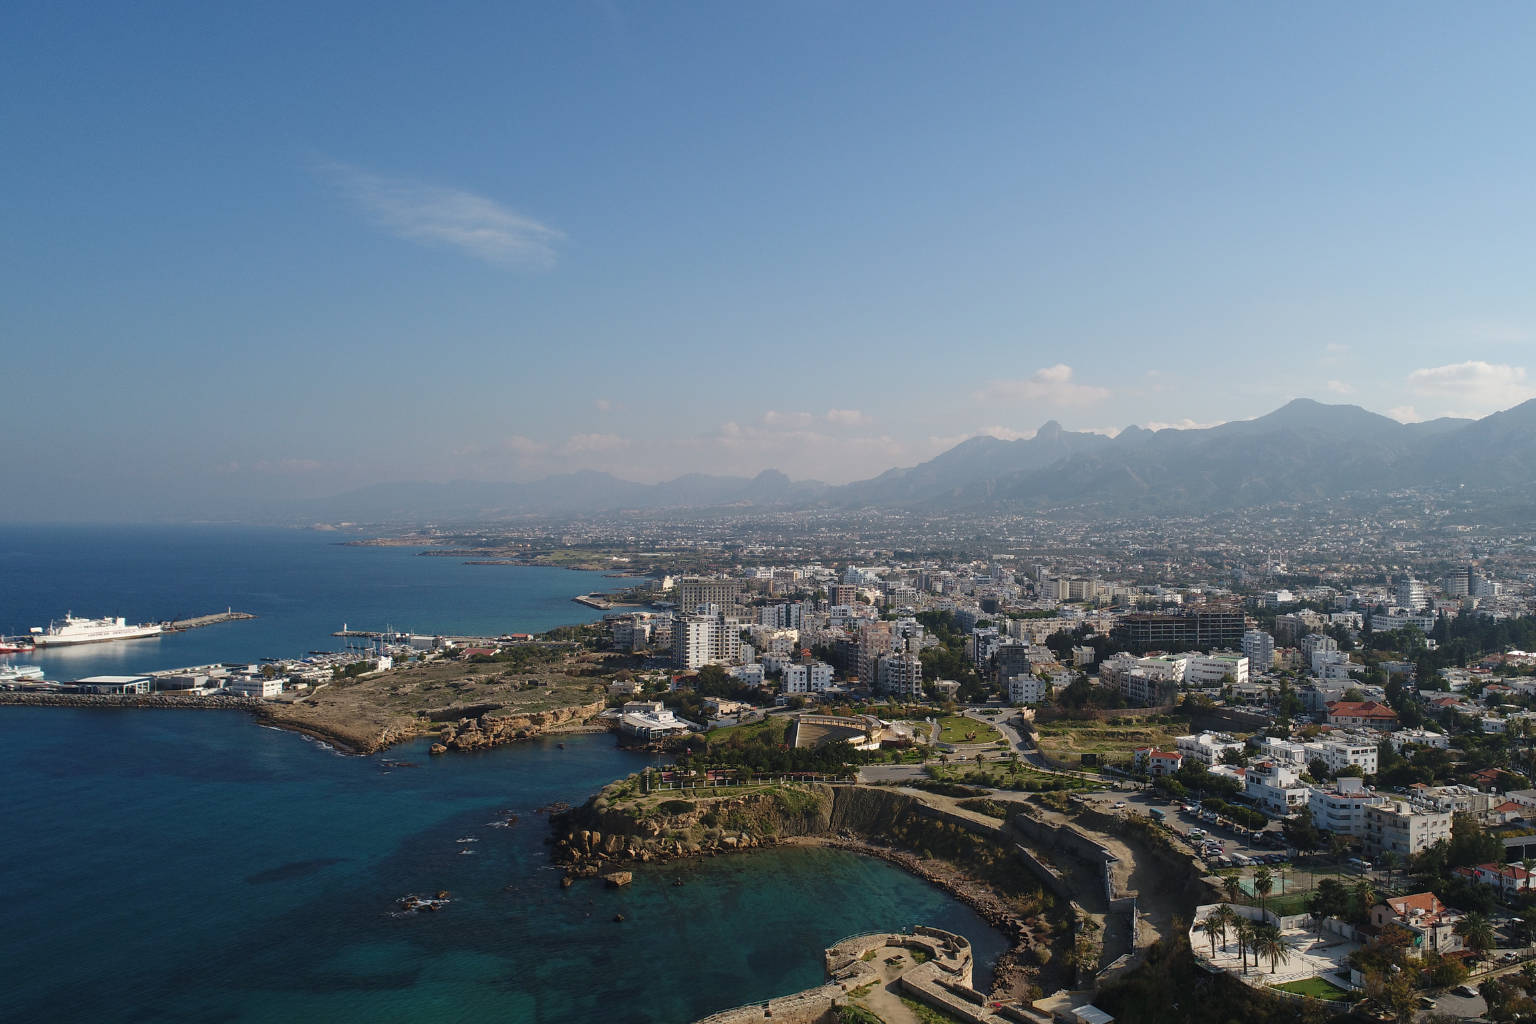 Sky, mountains, view of the city of Kyrenia